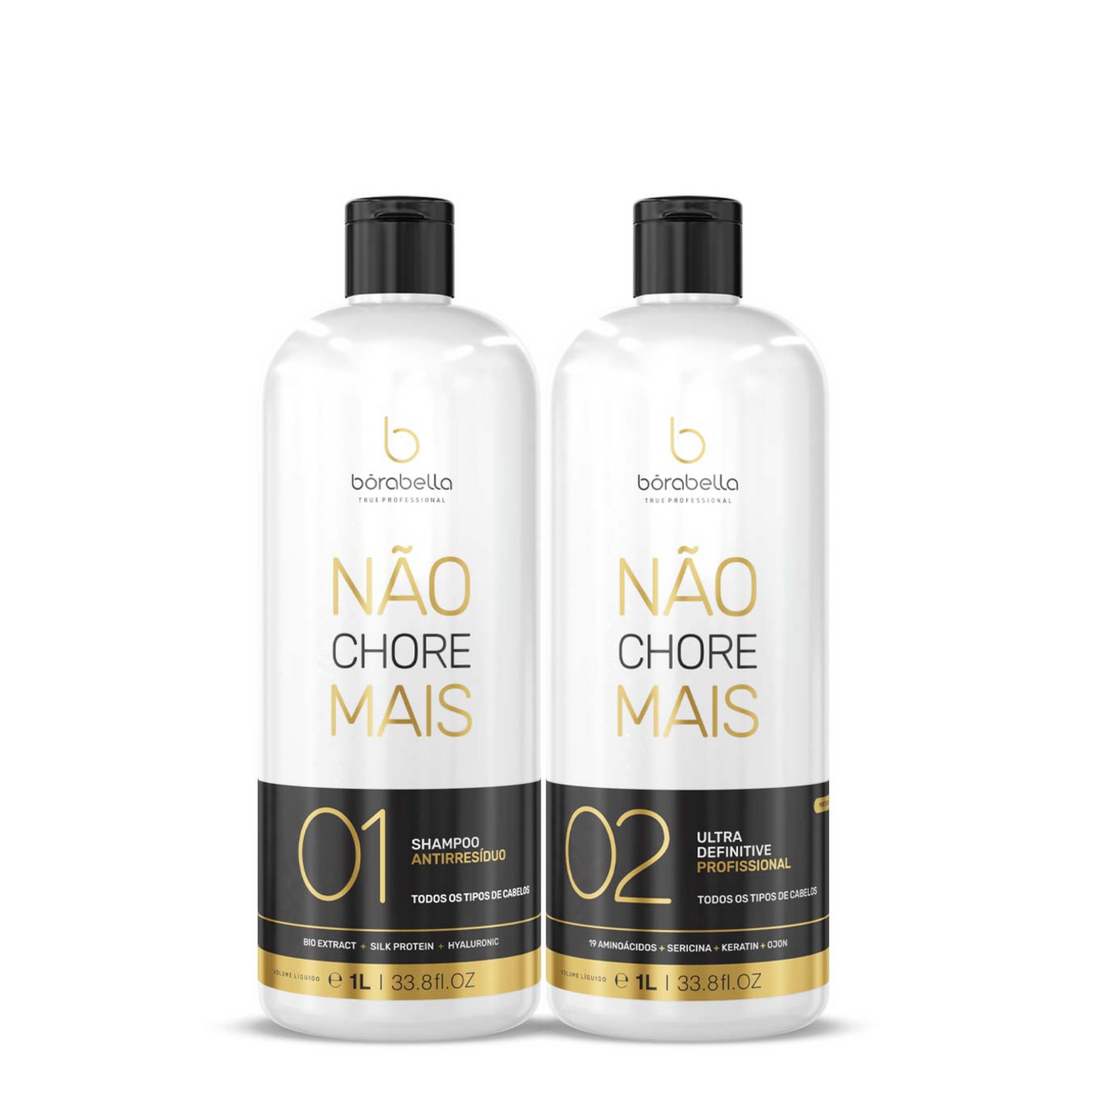 Borabella Nao Chore Mais No More Crying Brazilian Keratin Treatment 2x1000ml  33.8 oz | Progressive Brush | Smoothing and Straightening System | Volume Reducer | 100% Straight Hair